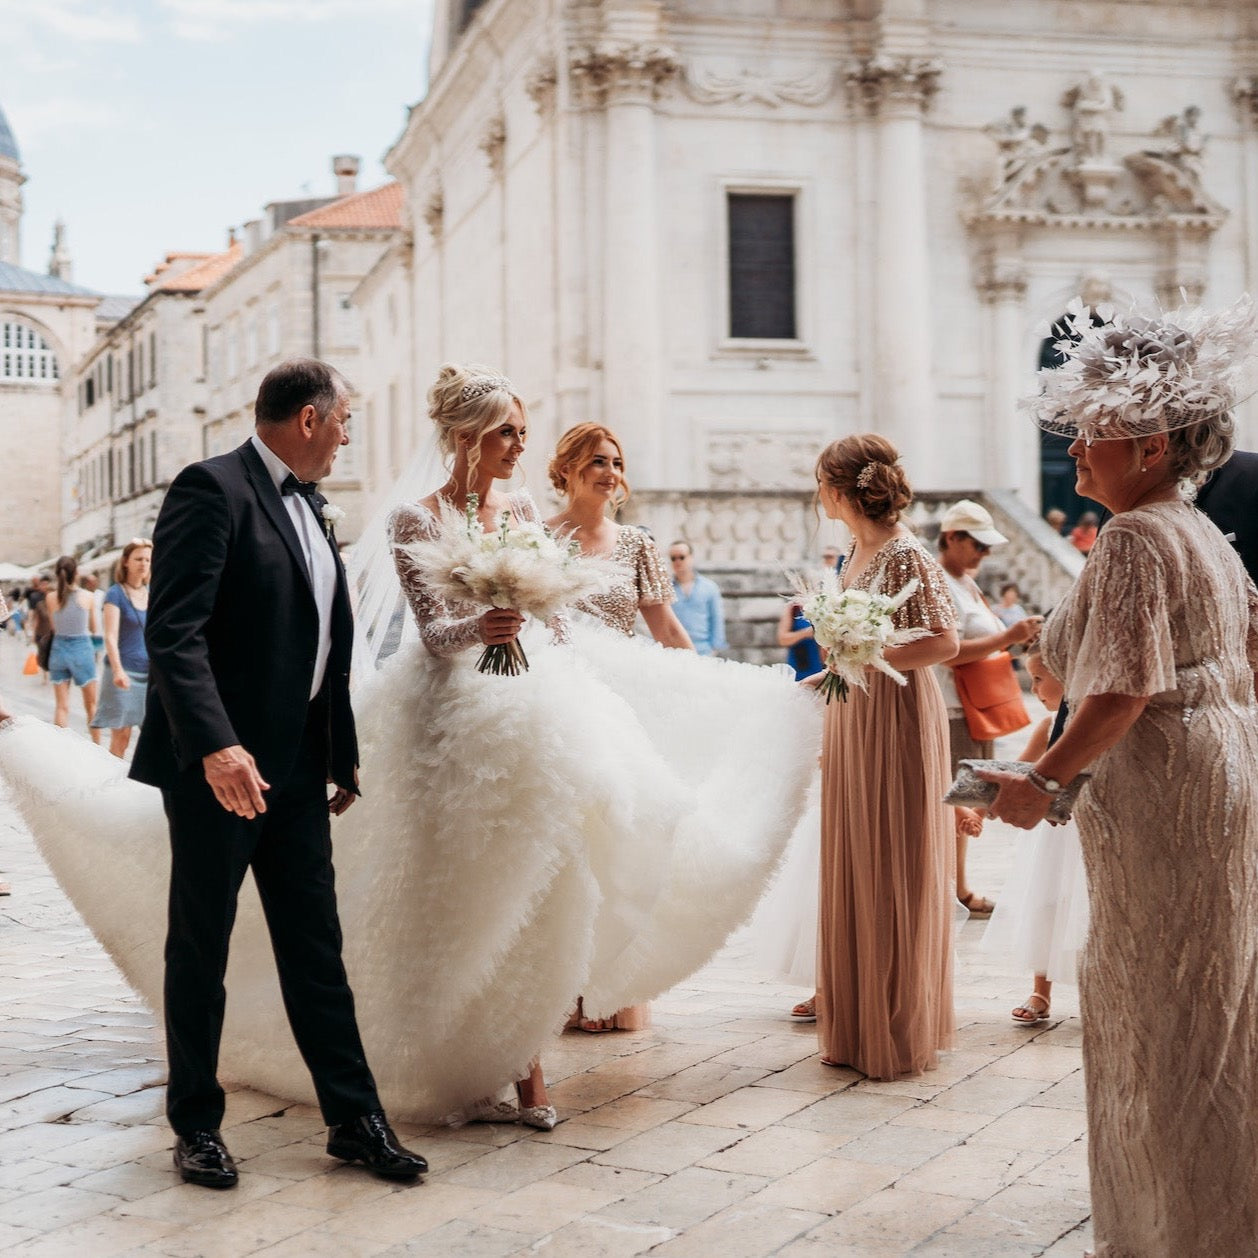 Shoot a wedding with us | Malta - Photo & Cinema